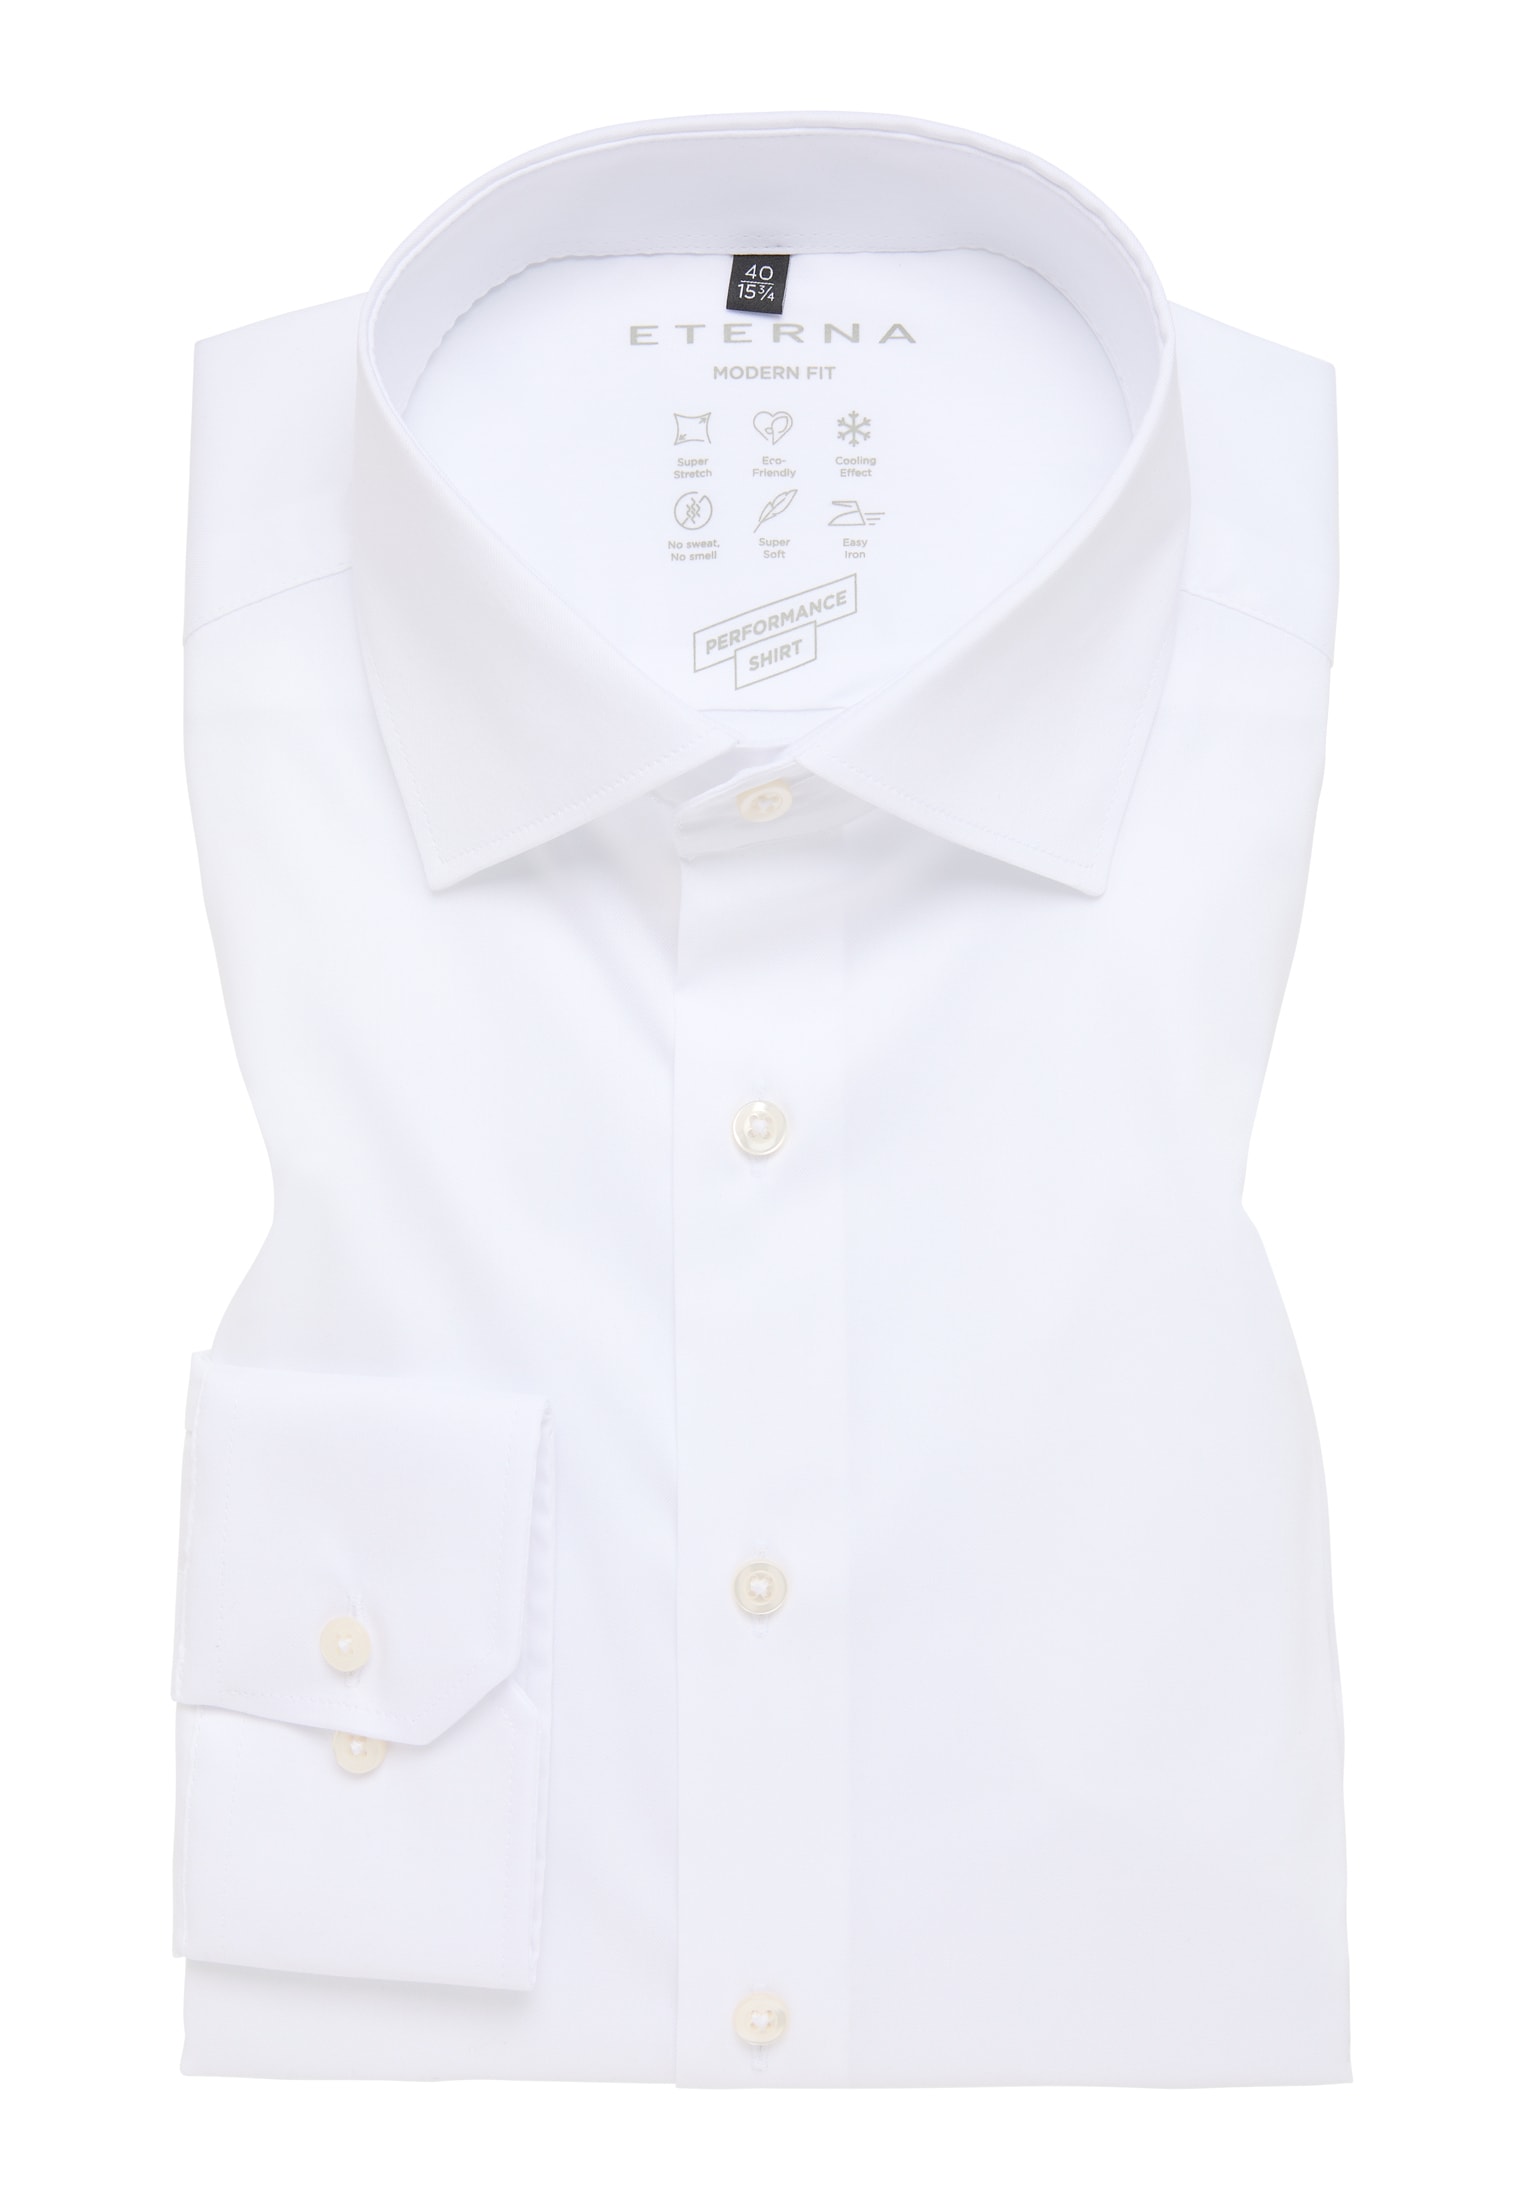 MODERN FIT Performance Shirt in unifarben weiß weiß 1SH02224-00-01-40-1/1 Langarm | 40 | | 